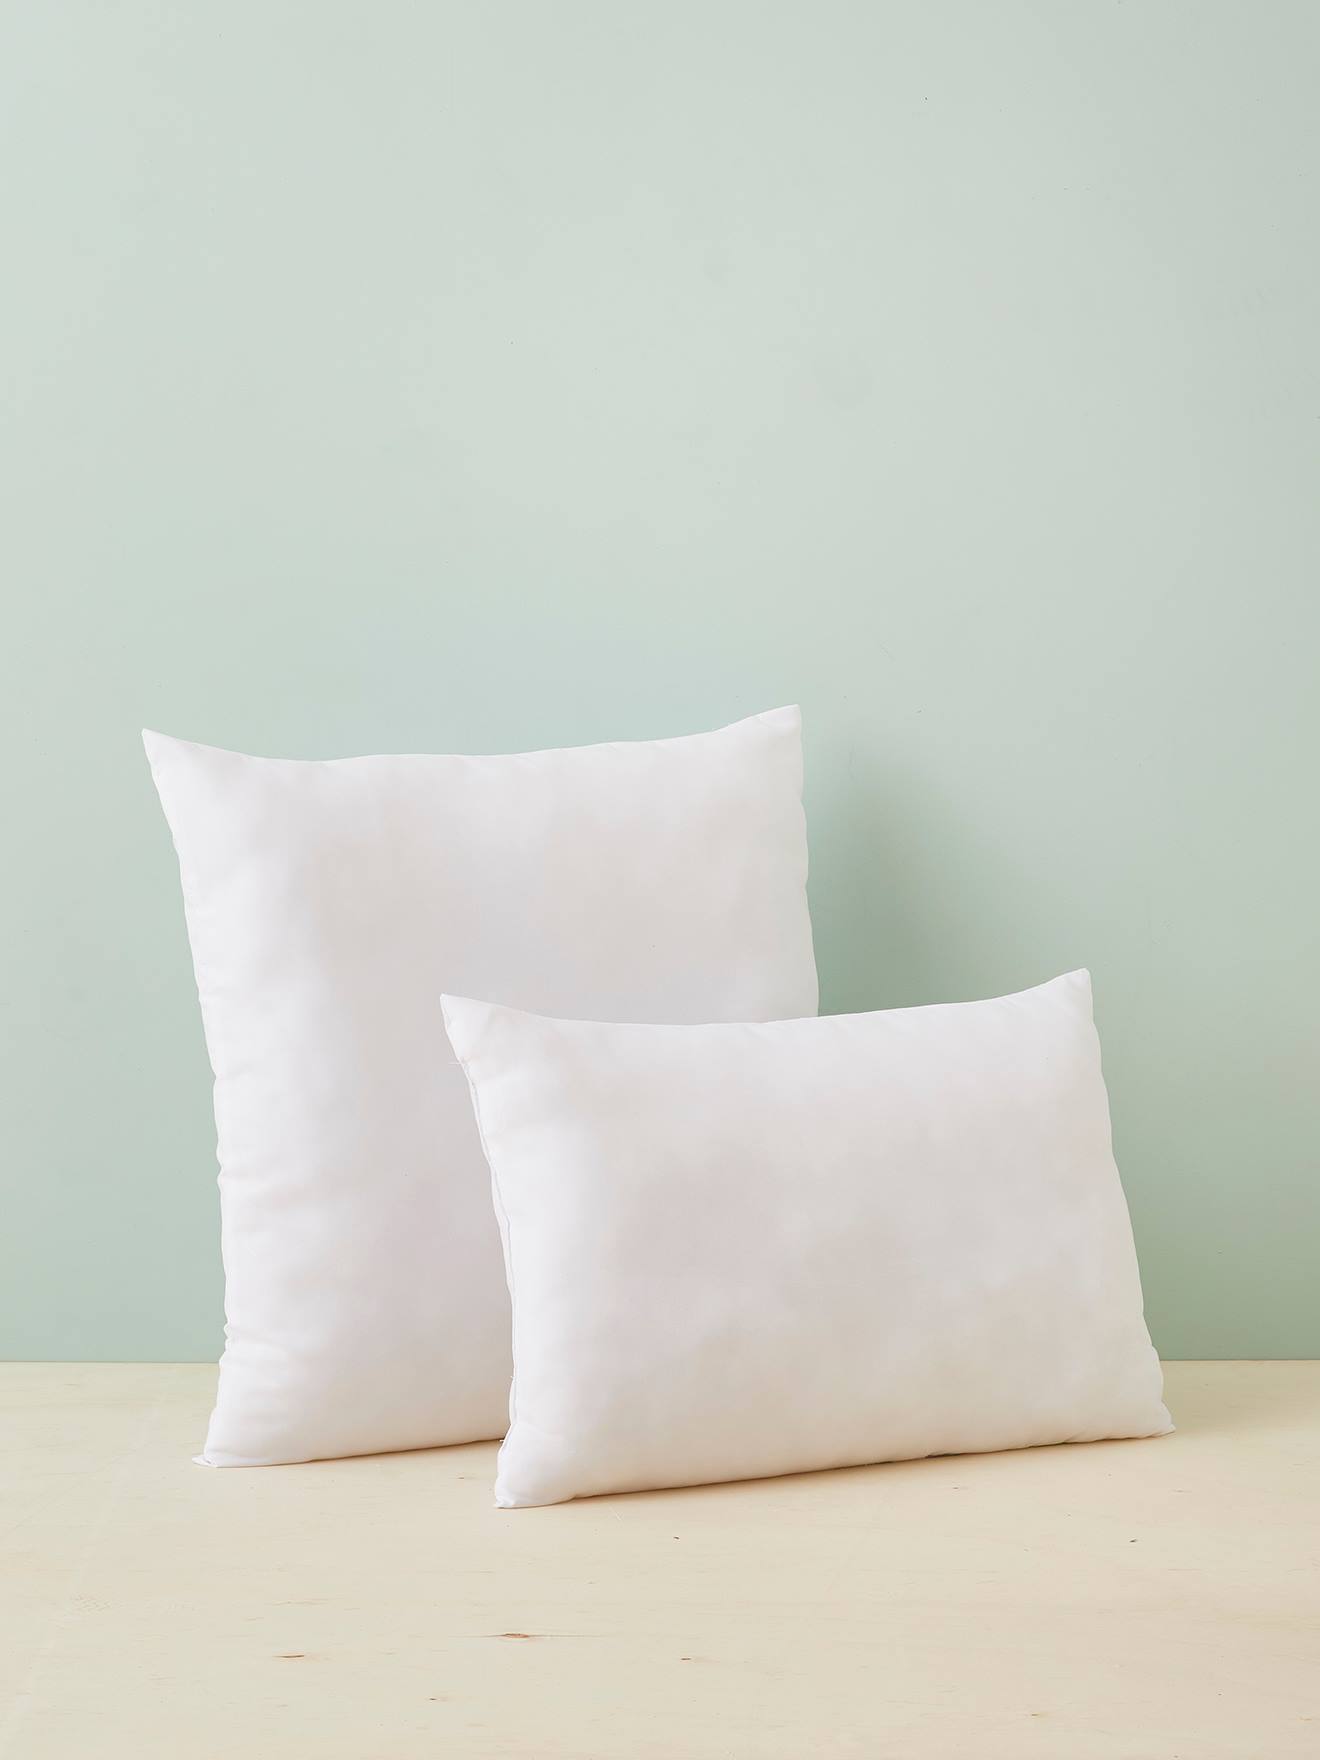 Almofada conforto firme, antiácaros com tratamento Bi-ome® branco claro liso